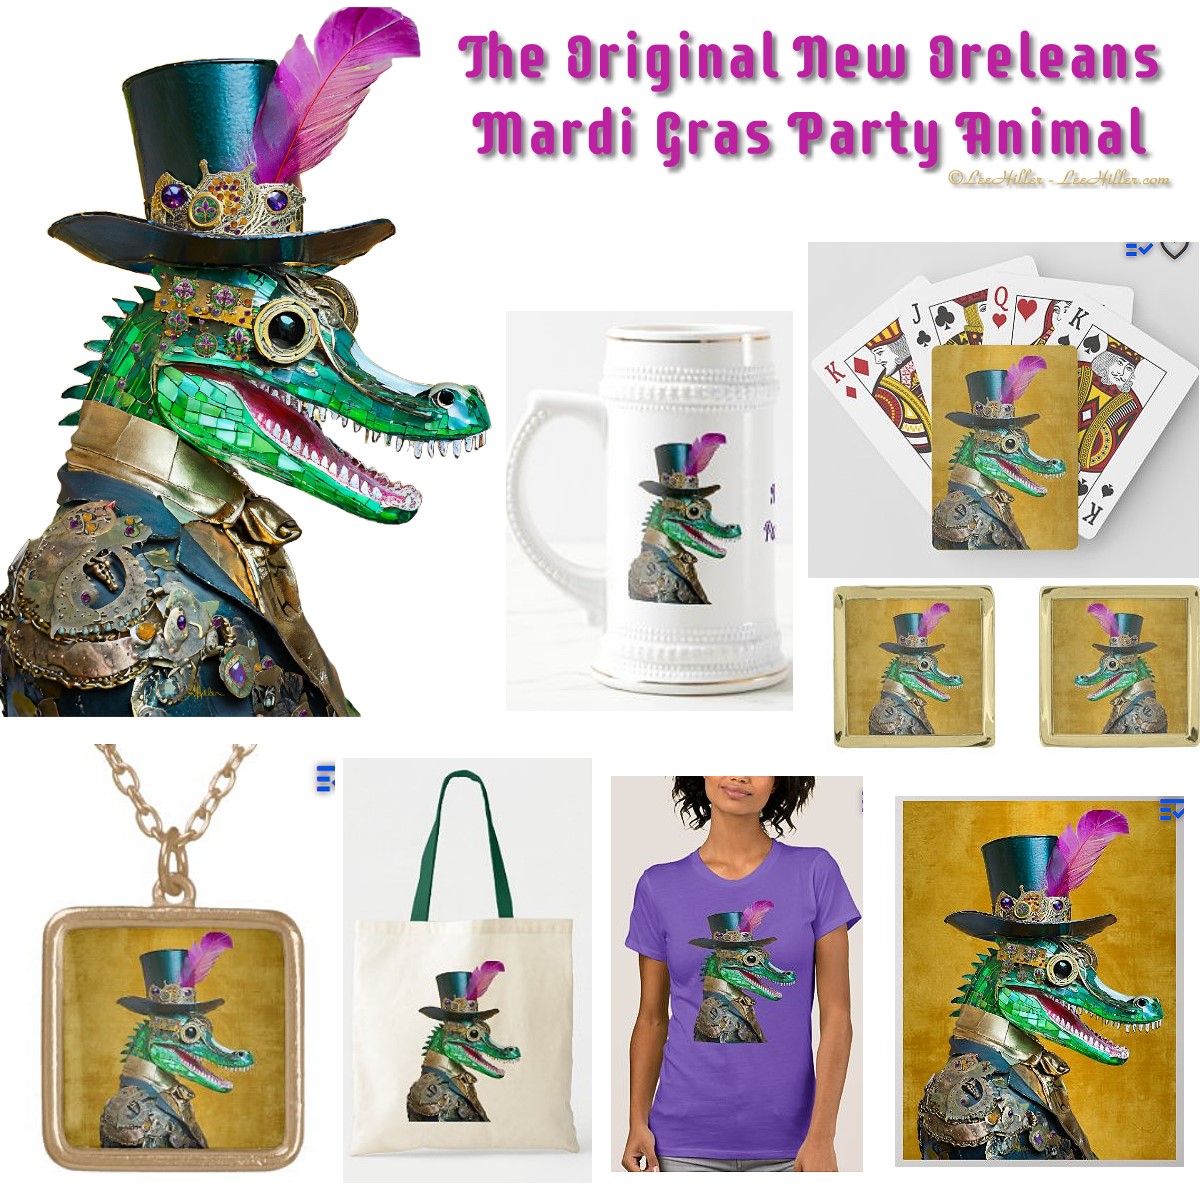 ✨🃏🎭🎉⚜👑⚜🎉🎭🃏✨
It's The Original New Orleans Party Animal
zazzle.com/collections/11…

#Alligator #PartyAnimal #MardiGras #homedecor #giftideas #MardiGras2025 #partysupplies #MardiGrasParty #MardiGraCrew #NOLA #beerstein #barware #tshirts #cufflinks #necklace #totebag #puzzle